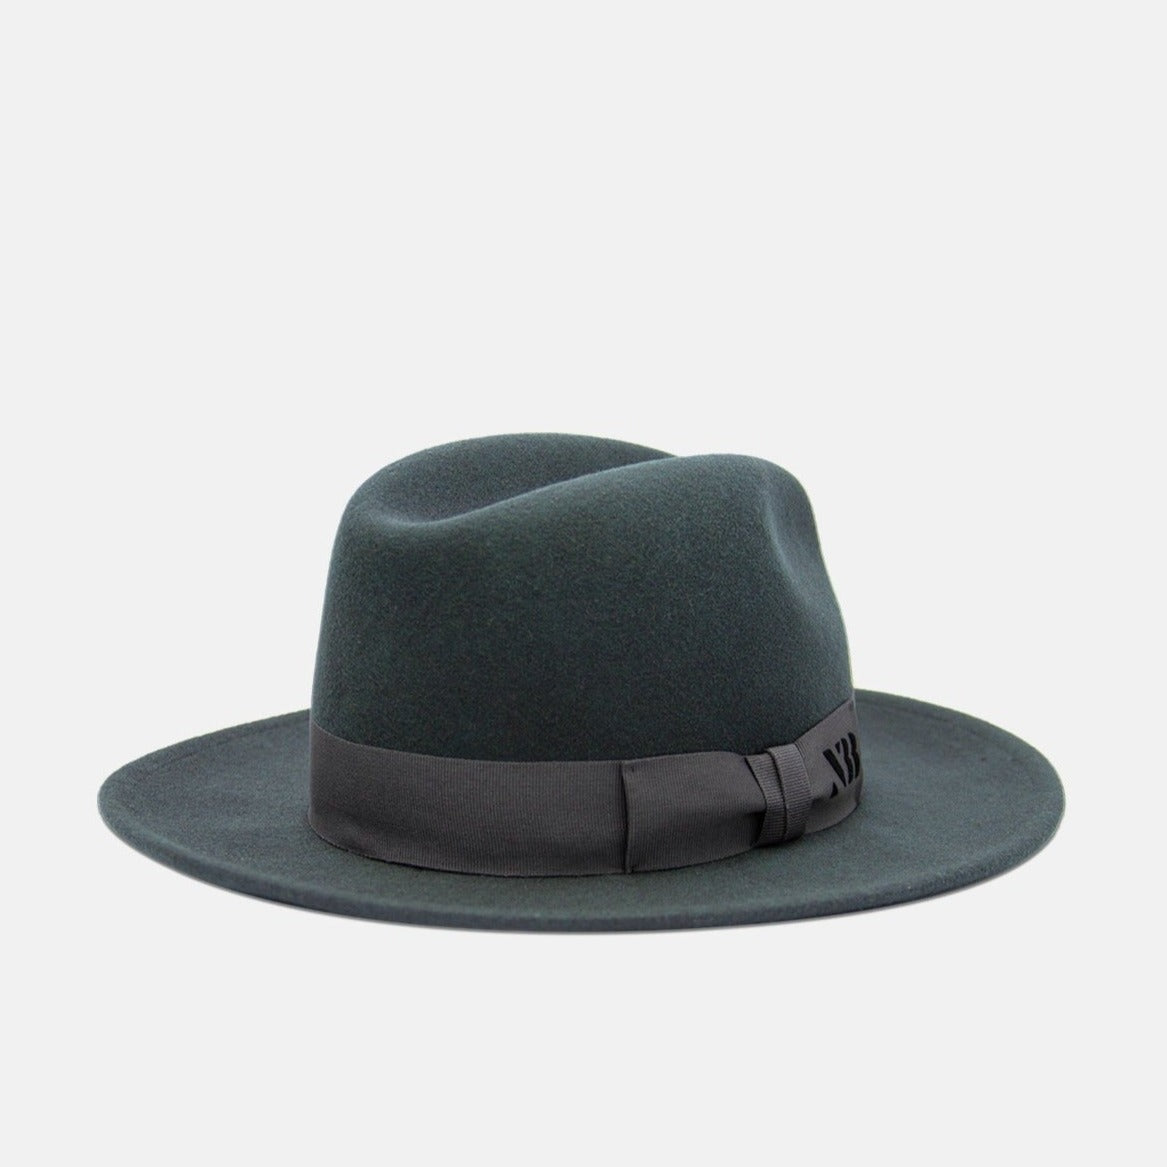 NTHIRTYTHREE - N33 - Fedora Felt Hat - Tilby Grey - handmade in Europe